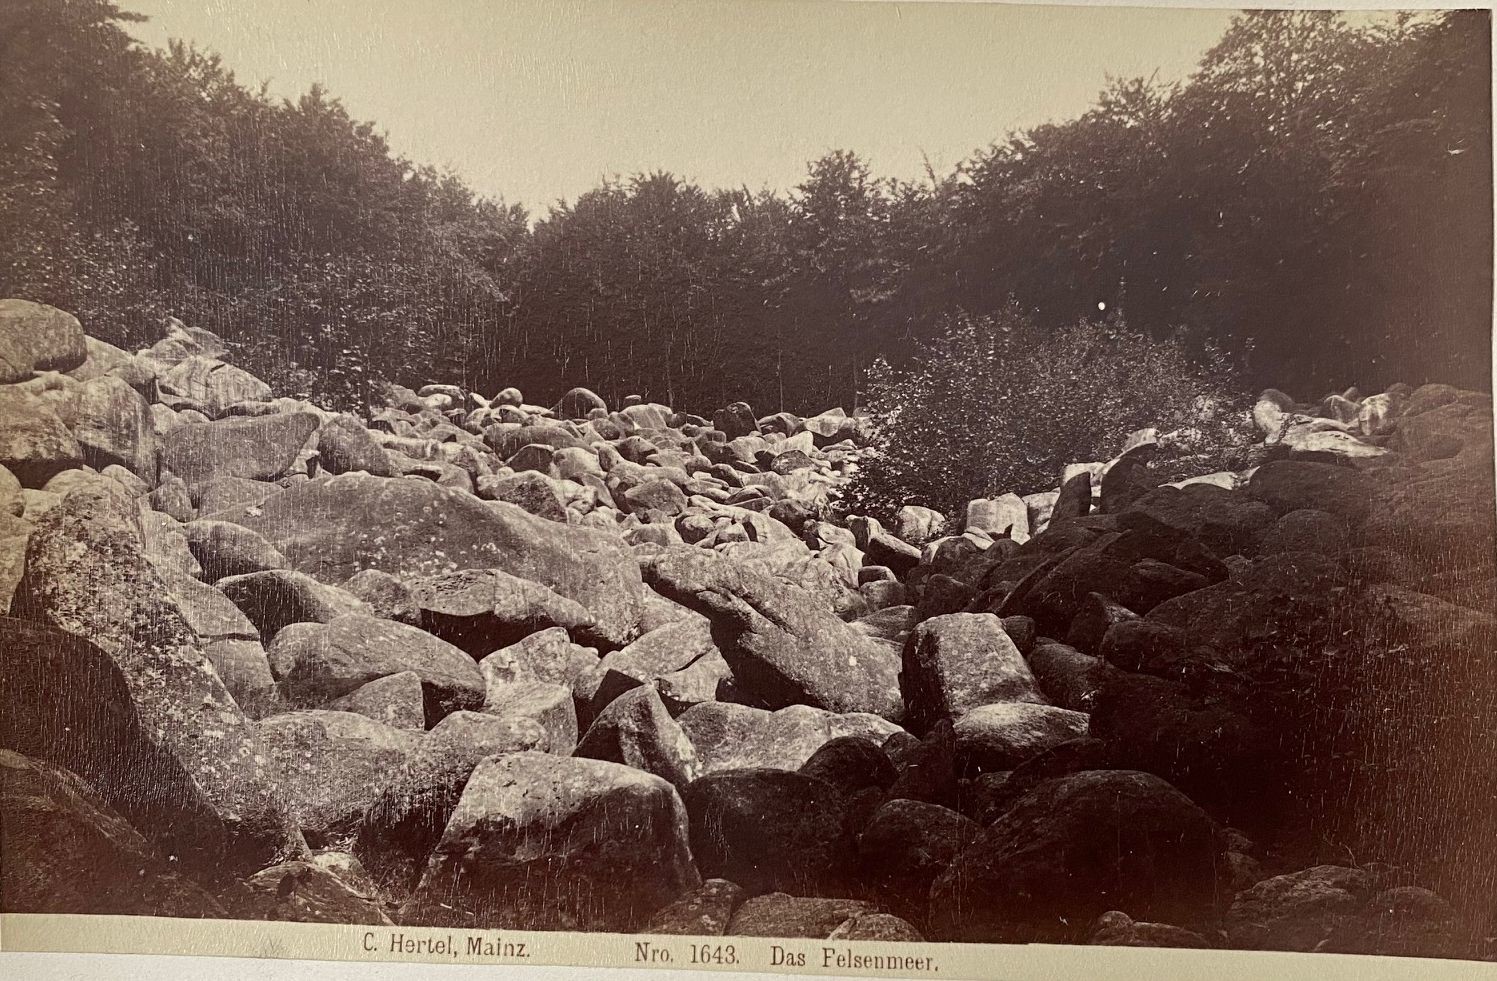 Fotografie, Carl Hertel No. 1643, Das Felsenmeer, ca. 1885 (Taunus-Rhein-Main - Regionalgeschichtliche Sammlung Dr. Stefan Naas CC BY-NC-SA)